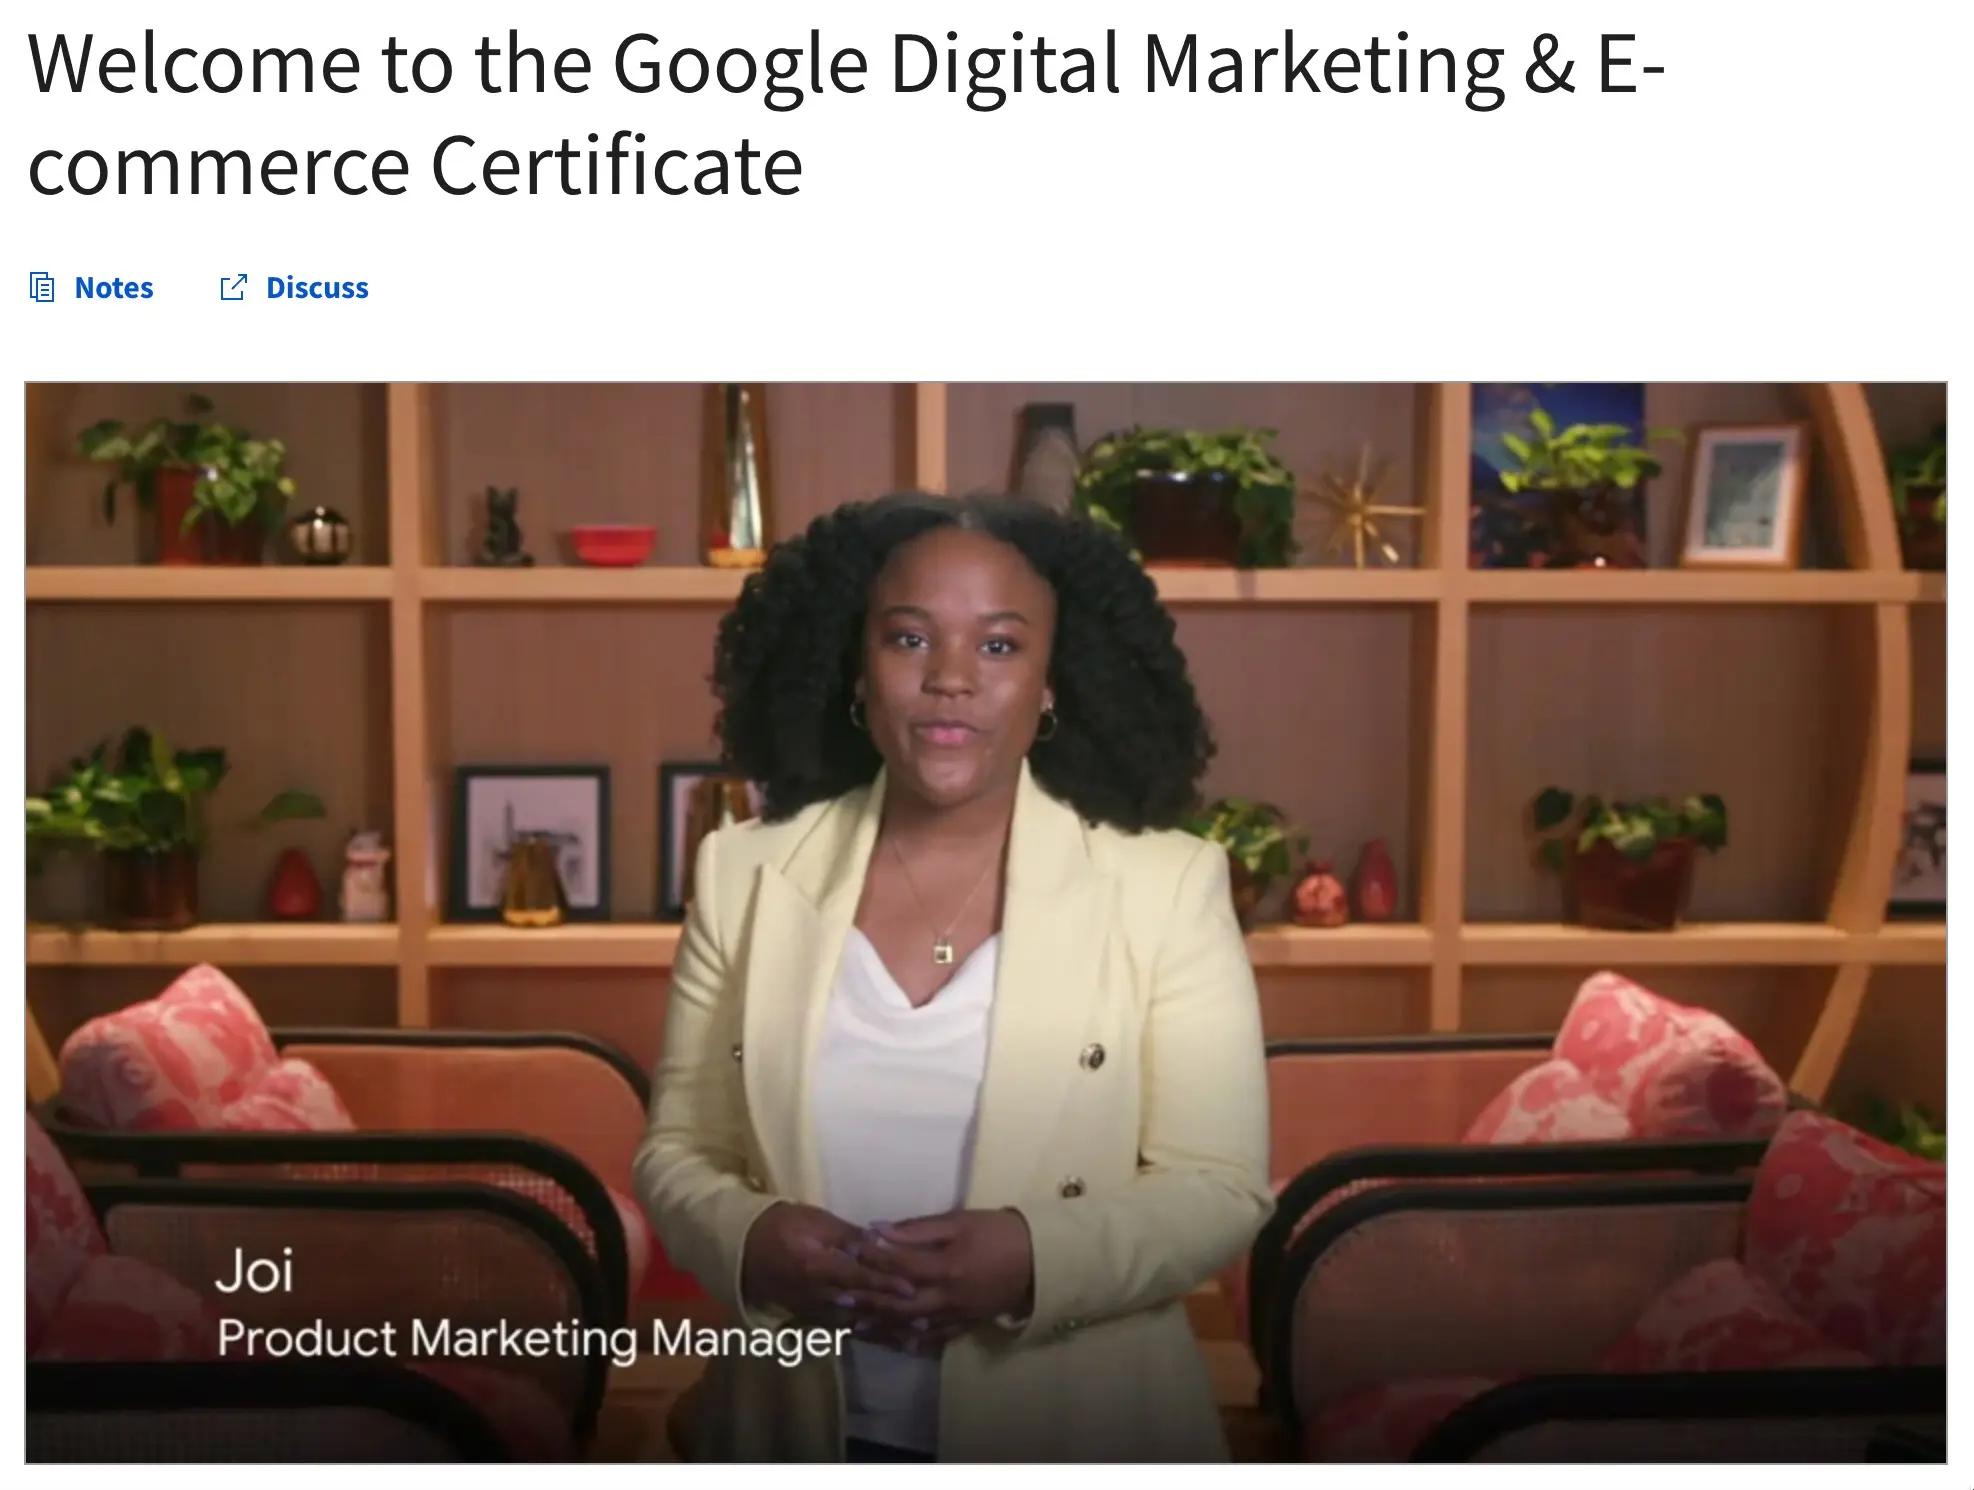 Google Digital Marketing & E-commerce Certificate Welcome Note